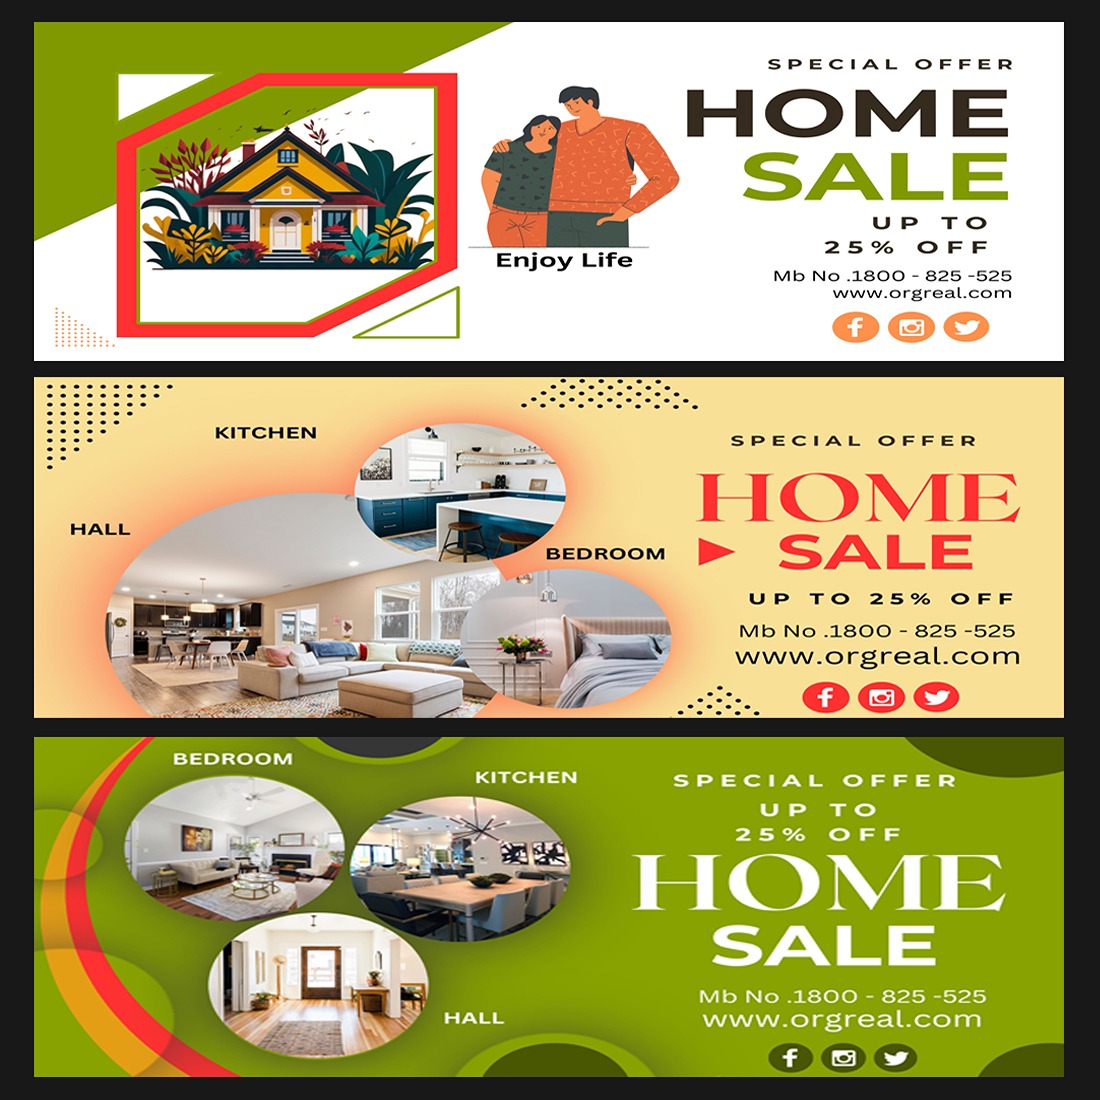 home sale banner copy 11zon 1 808